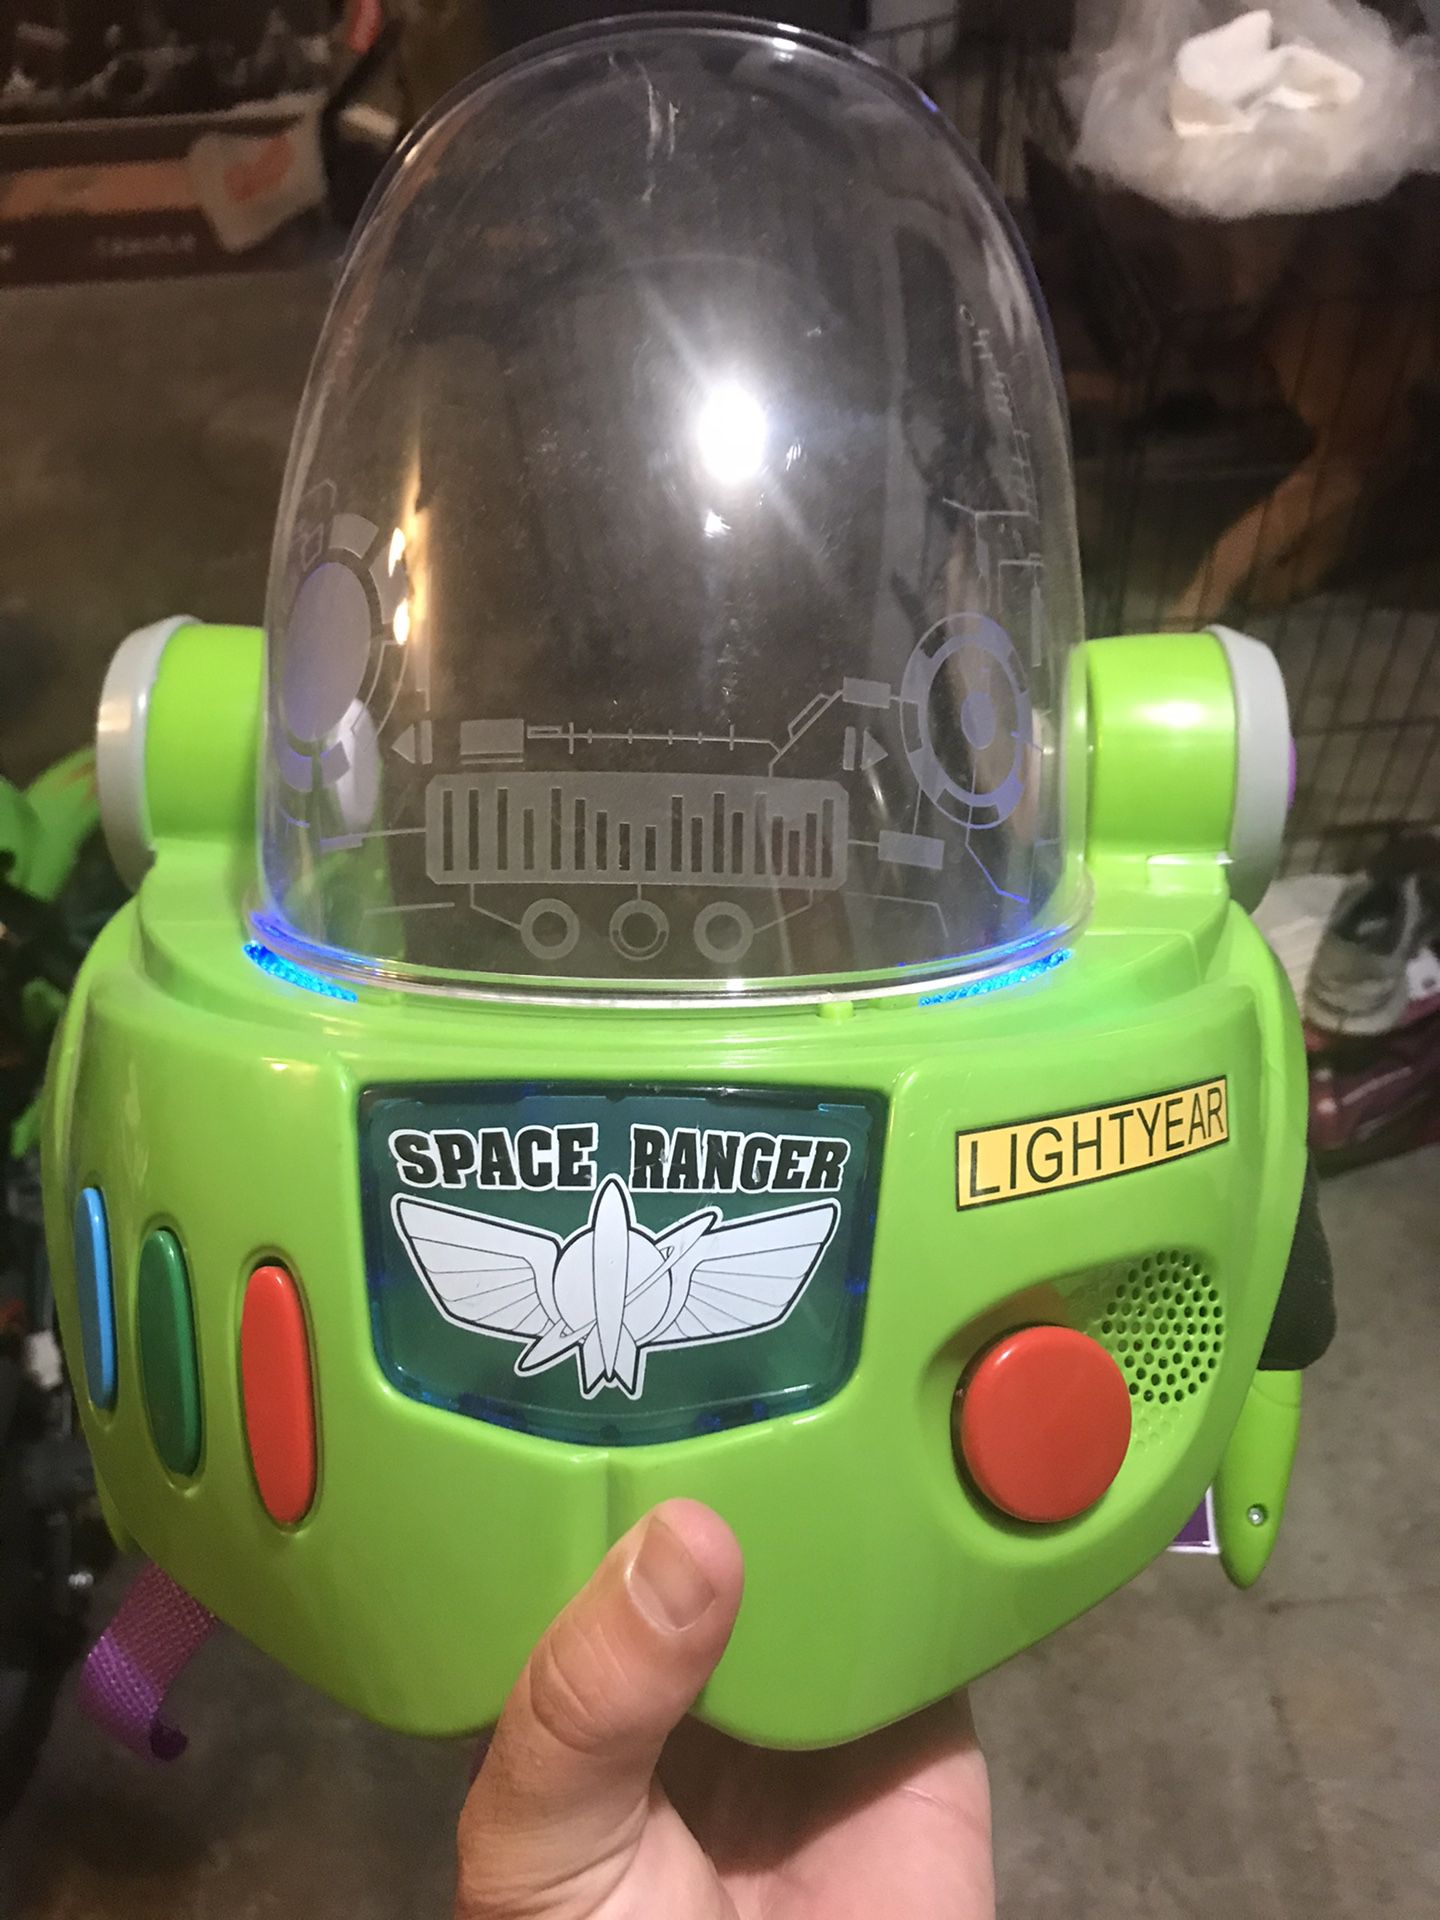 Buzz light year helmet